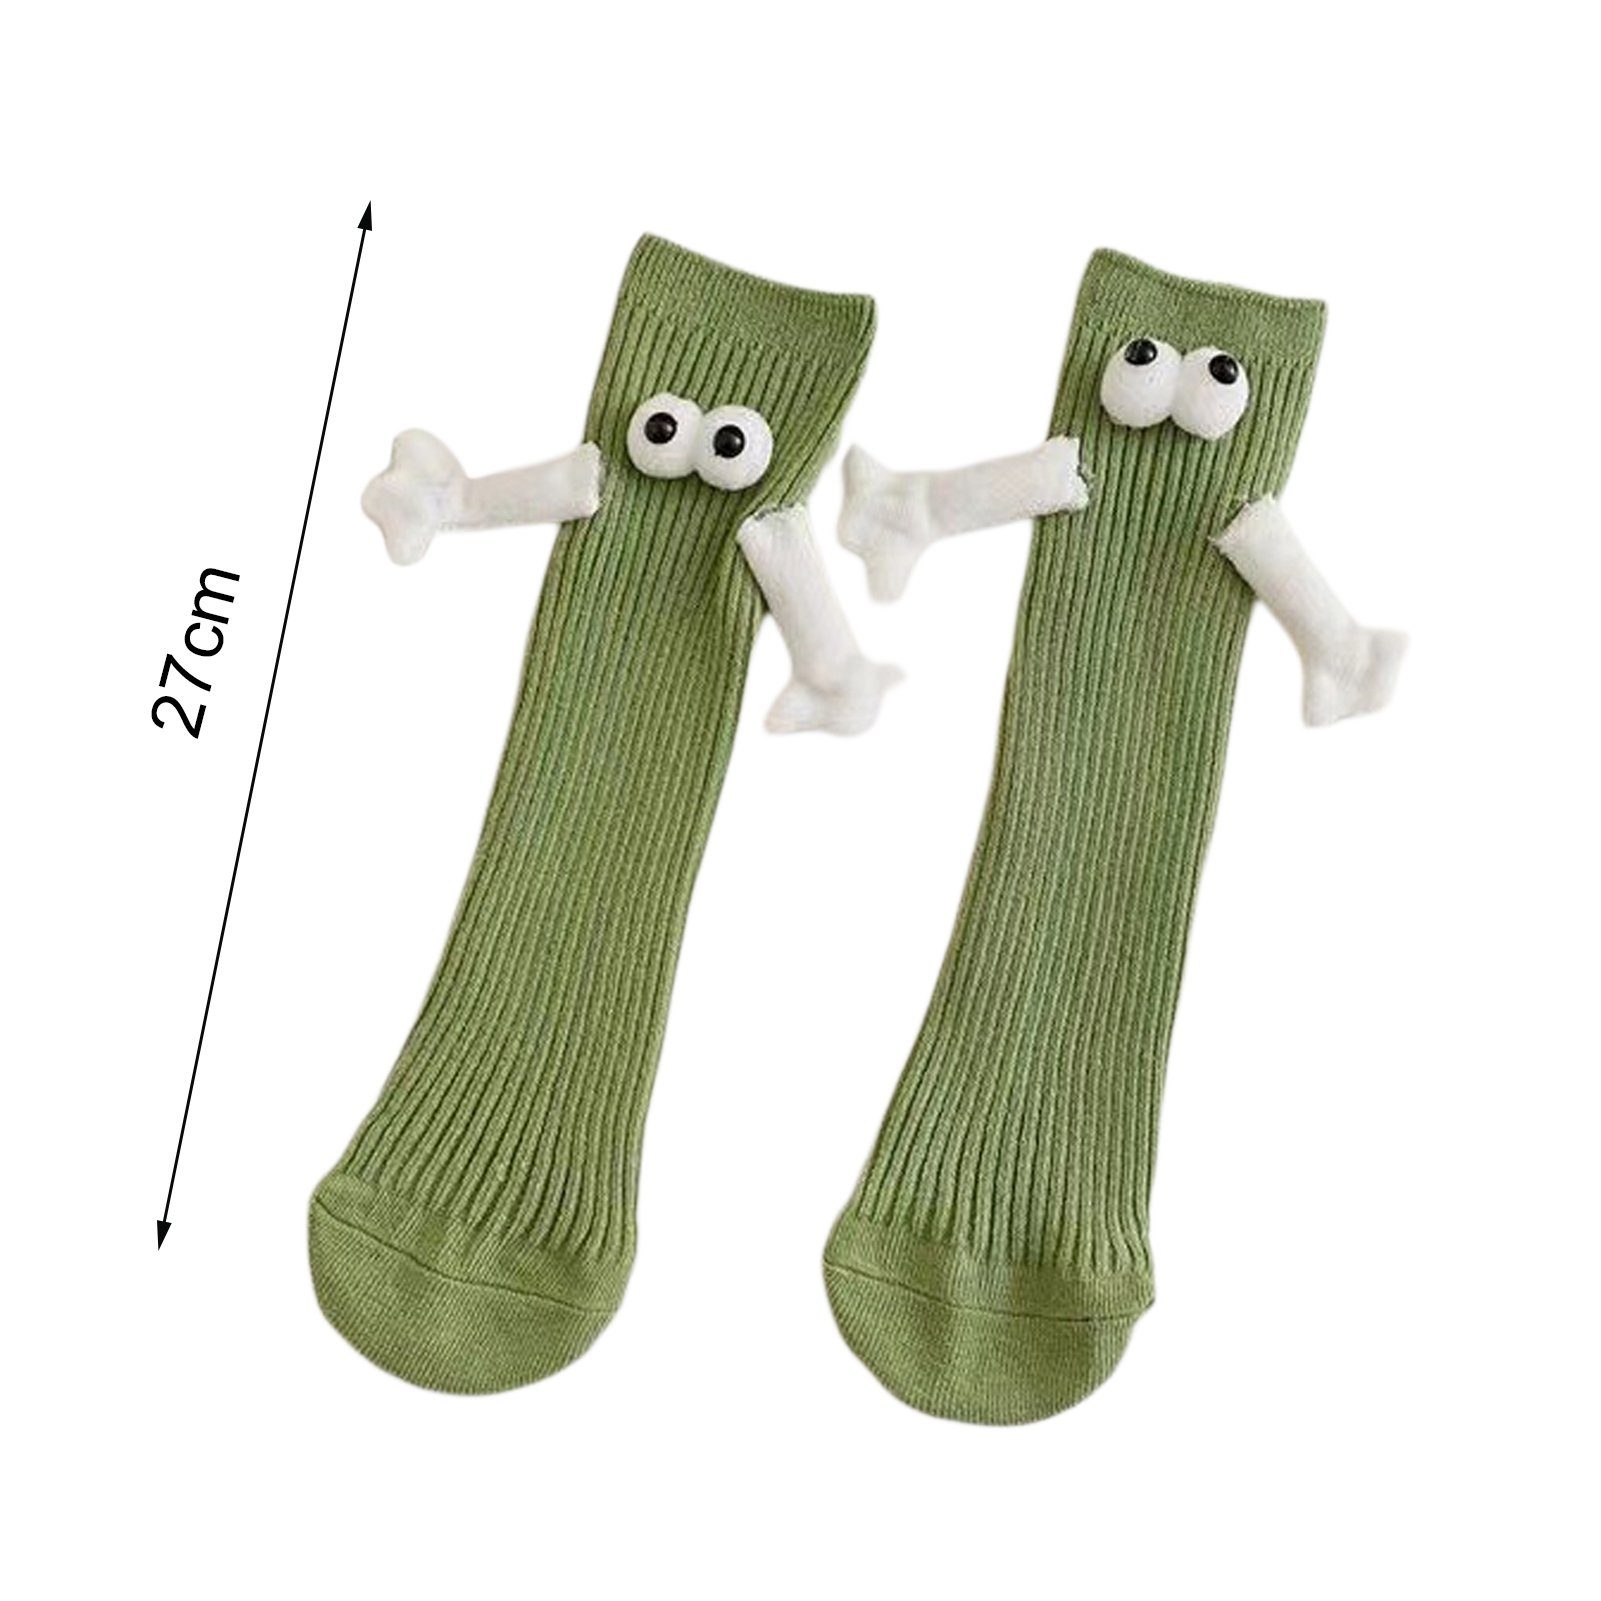 Trend-Persönlichkeit) Saug-3D-Puppenaugen-Socke Socken Unisex, (Magnetische Die Magneten, Paar für Händchen 2 und Paar-Händchenhalten-Socken, Gelb Lustige Socken Halten Mit Rutaqian Feinsocken